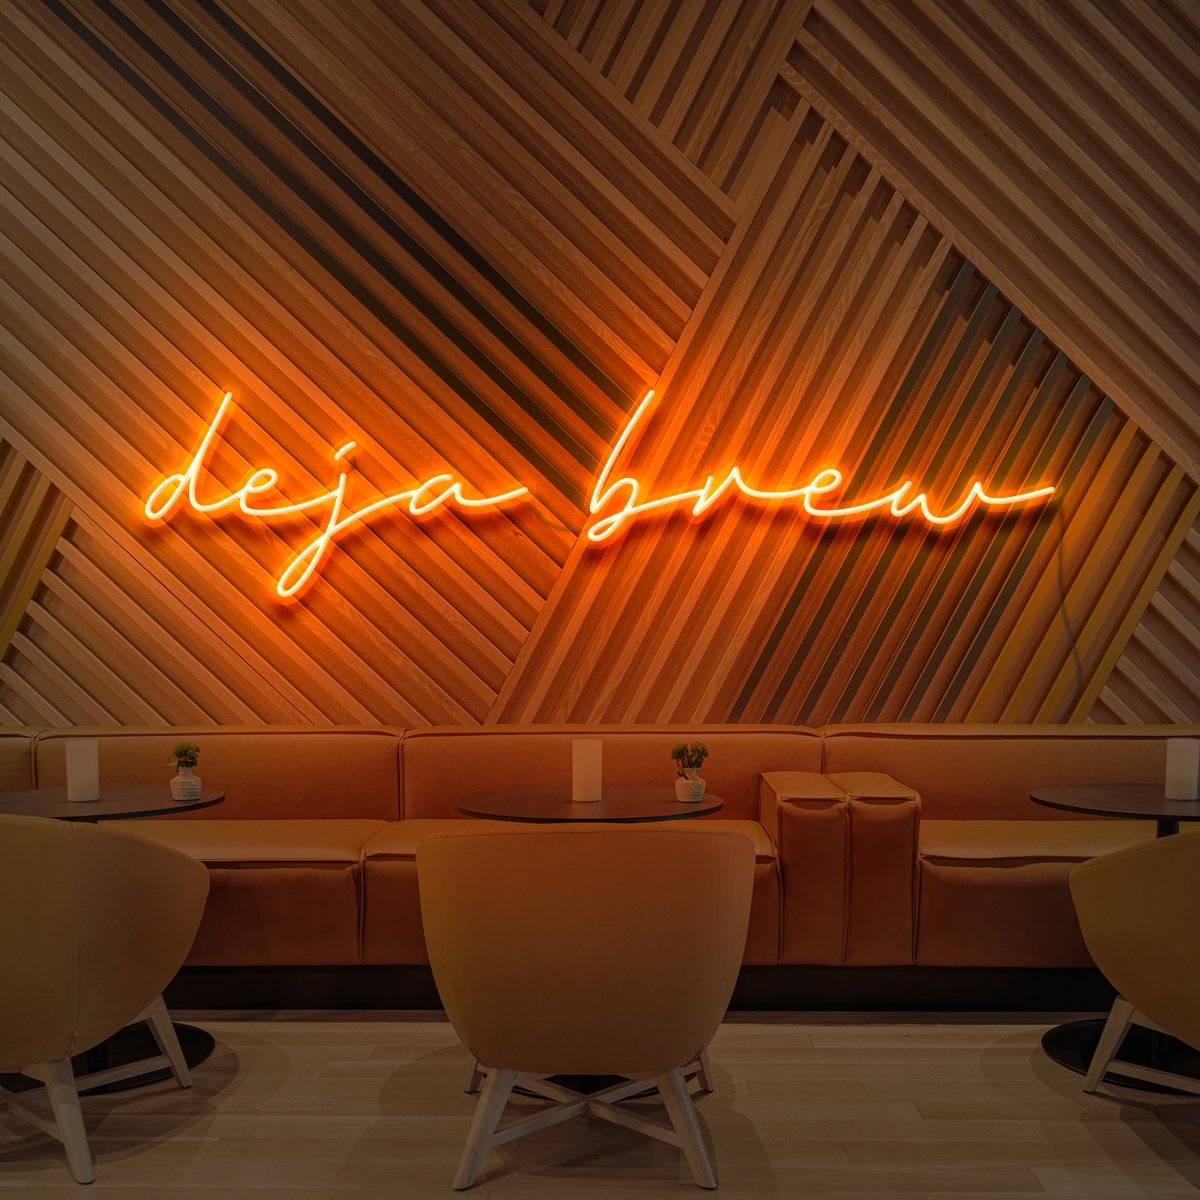 "Deja Brew" Neon Sign for Cafés 90cm (3ft) / Orange / LED Neon by Neon Icons